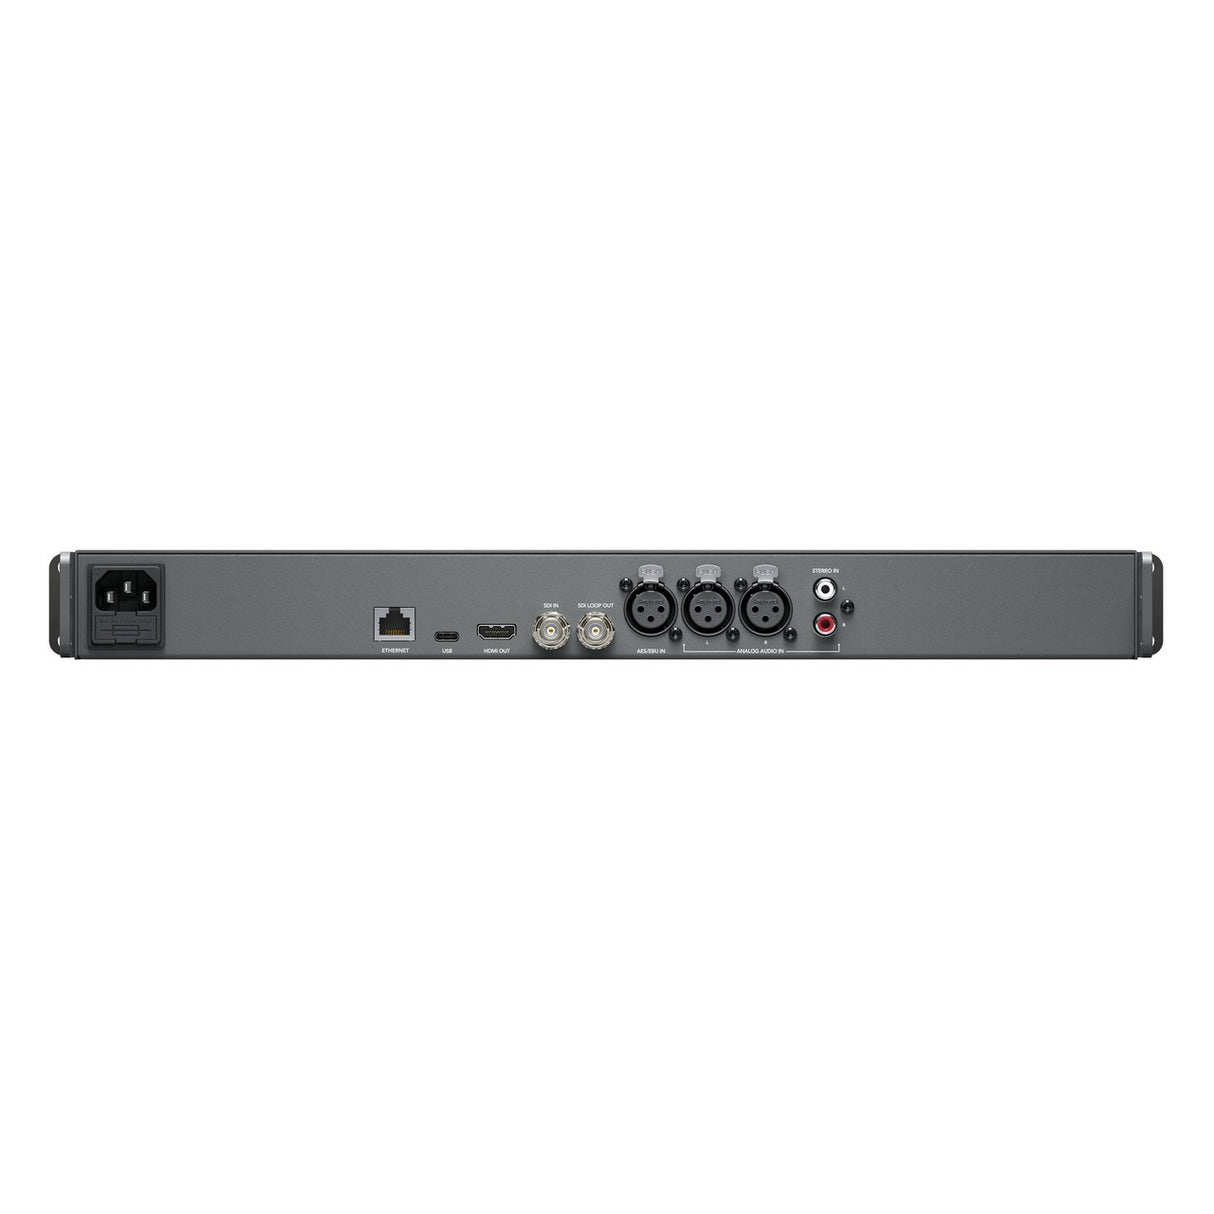 Blackmagic Design Audio Monitor 12G | Broadcast Quality Analog AES/EBU and SDI Audio Monitoring